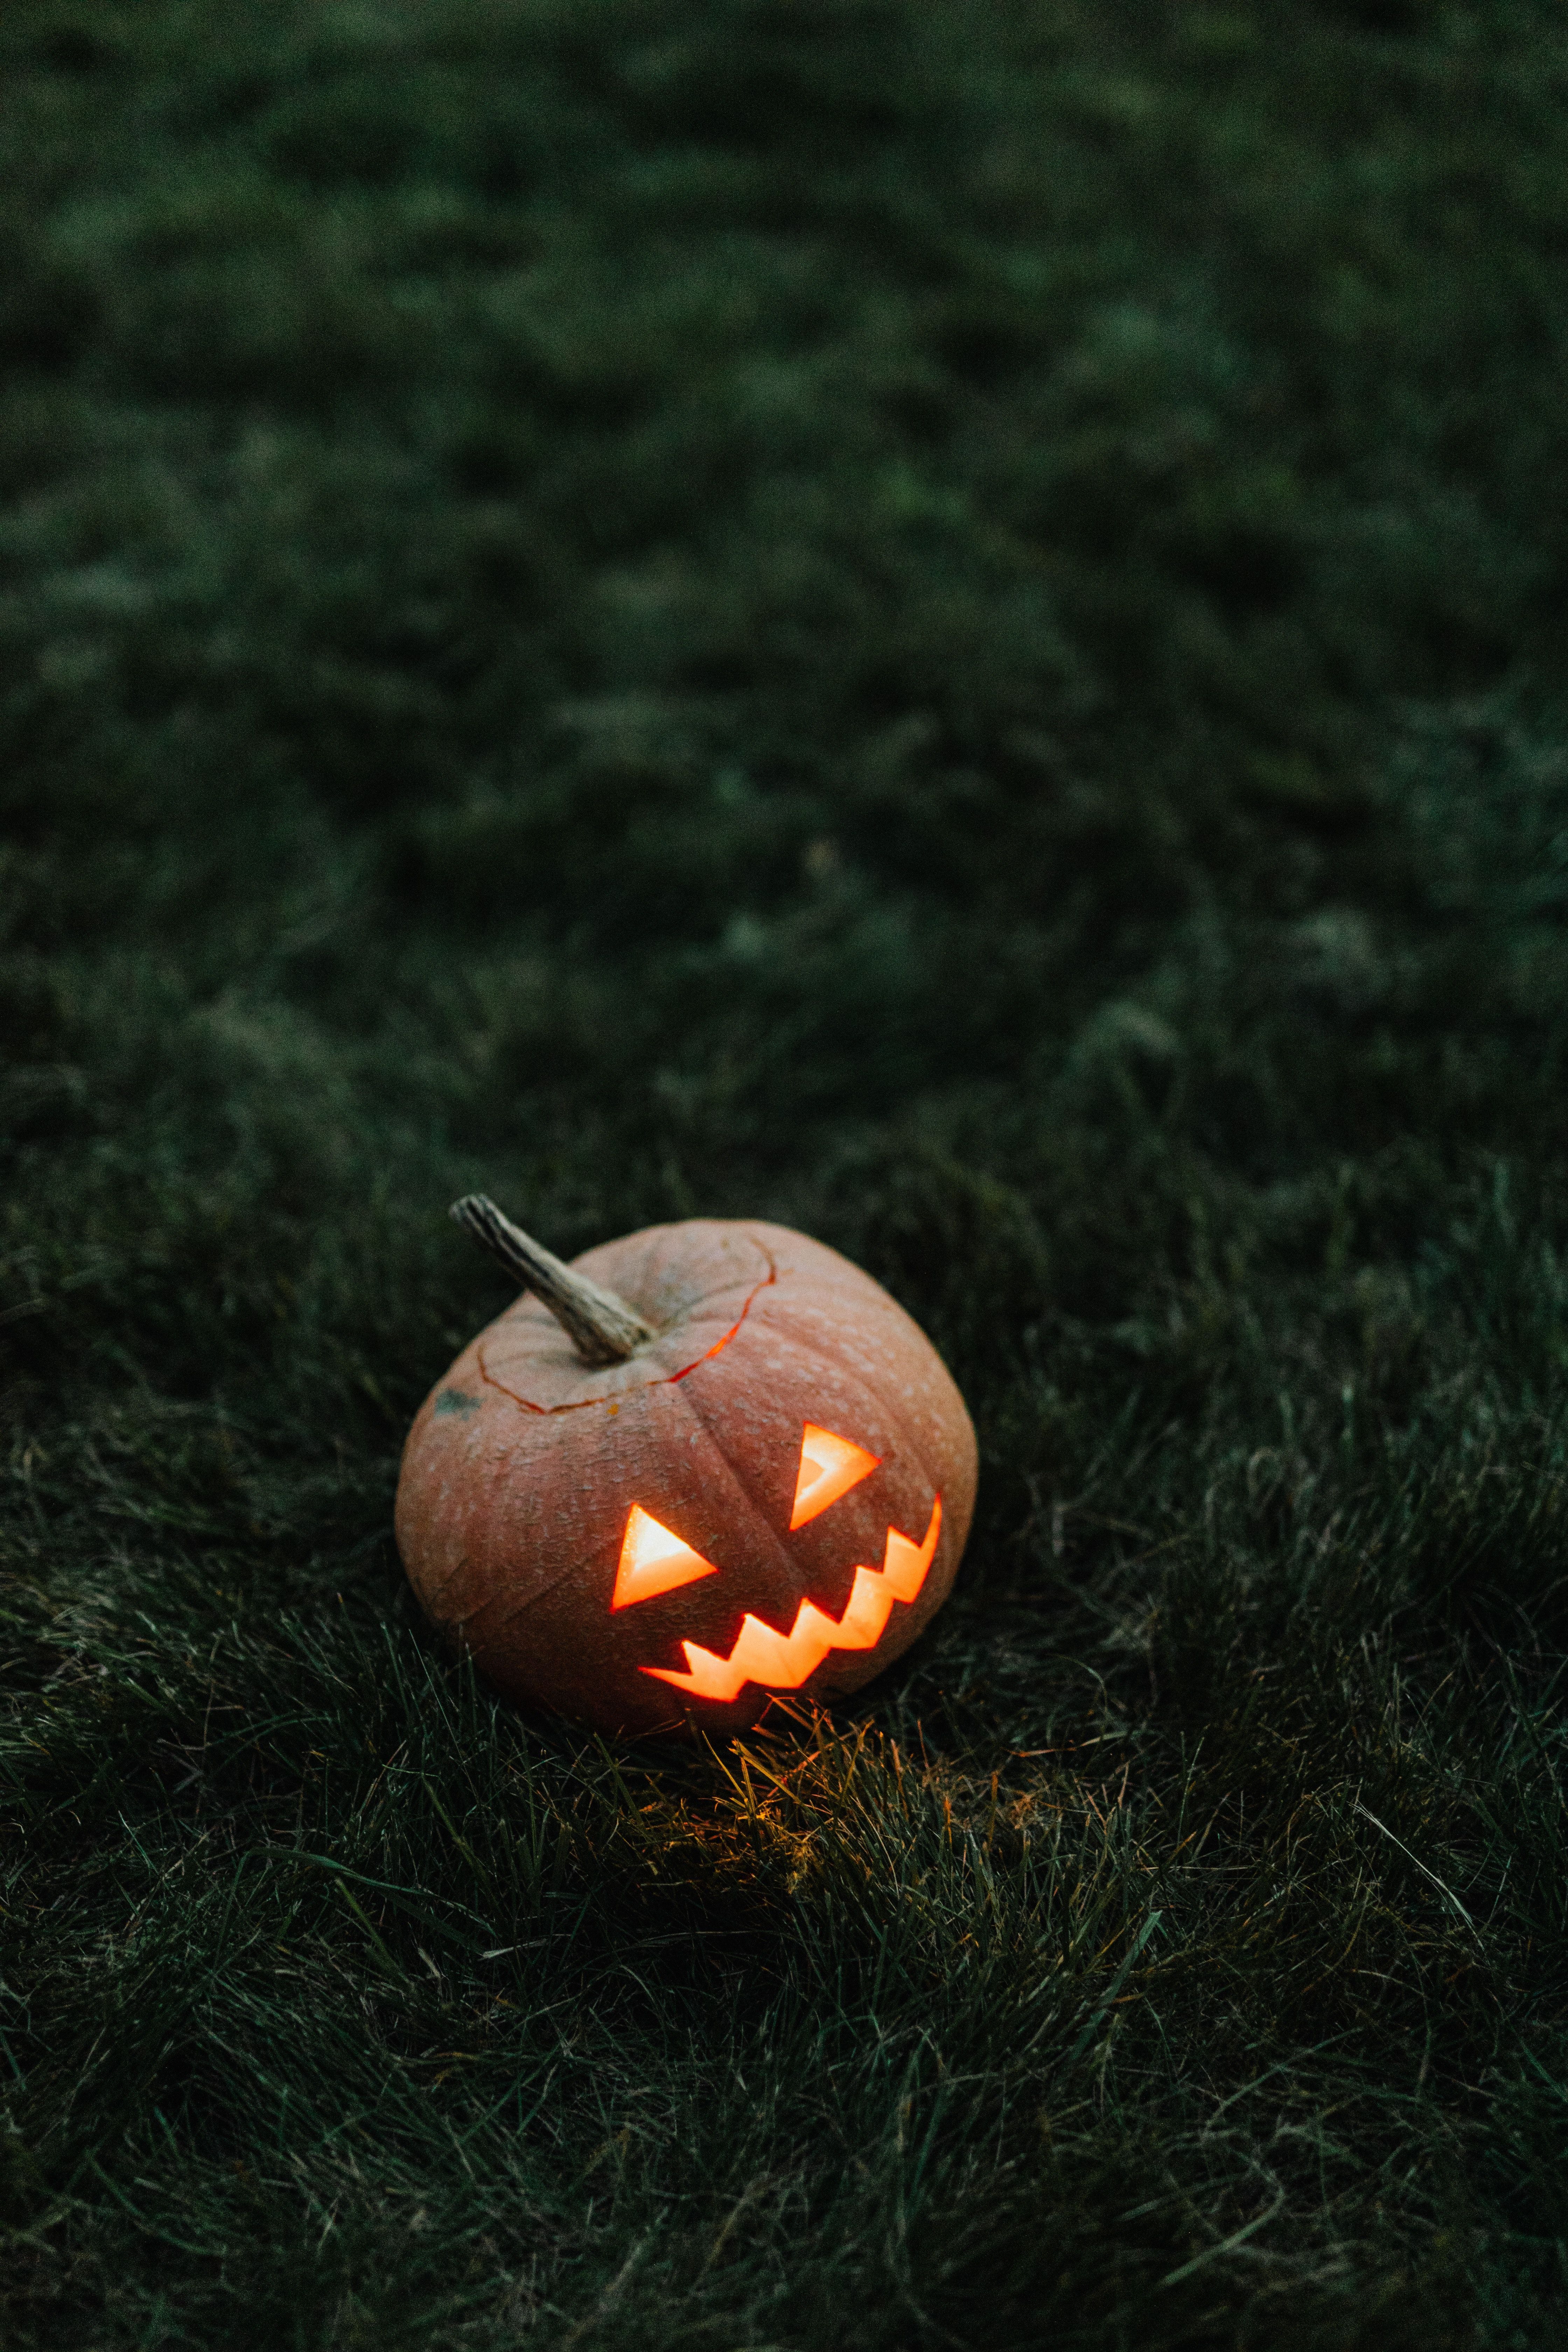 A jack o lantern sitting on the grass - Halloween, spooky